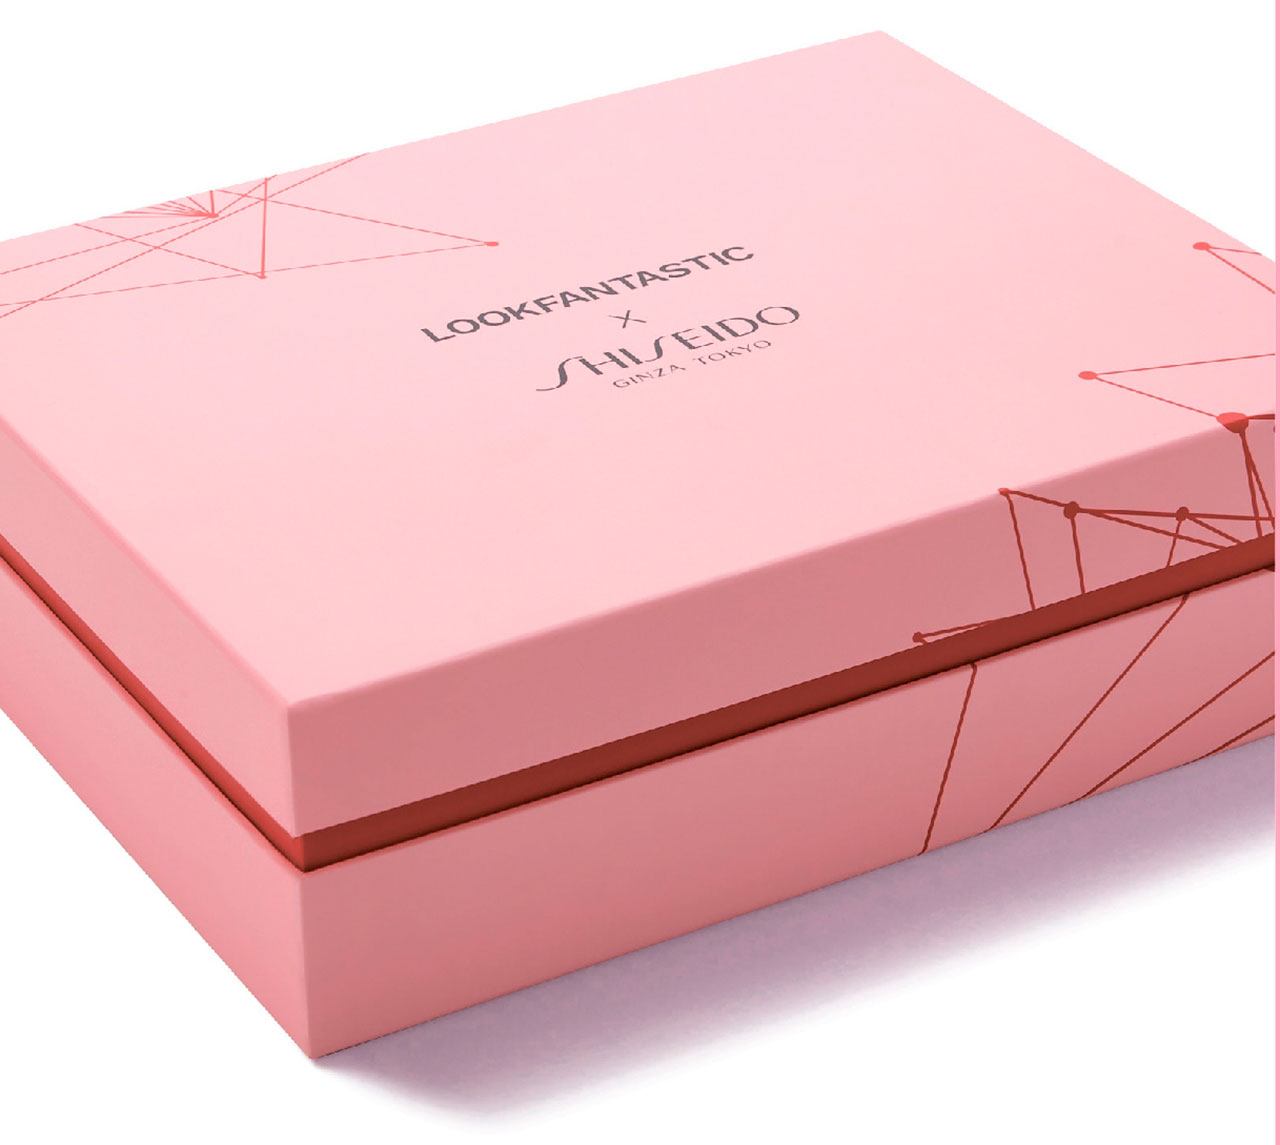 LOOKFANTASTIC x Shiseido Limited Edition Beauty Box